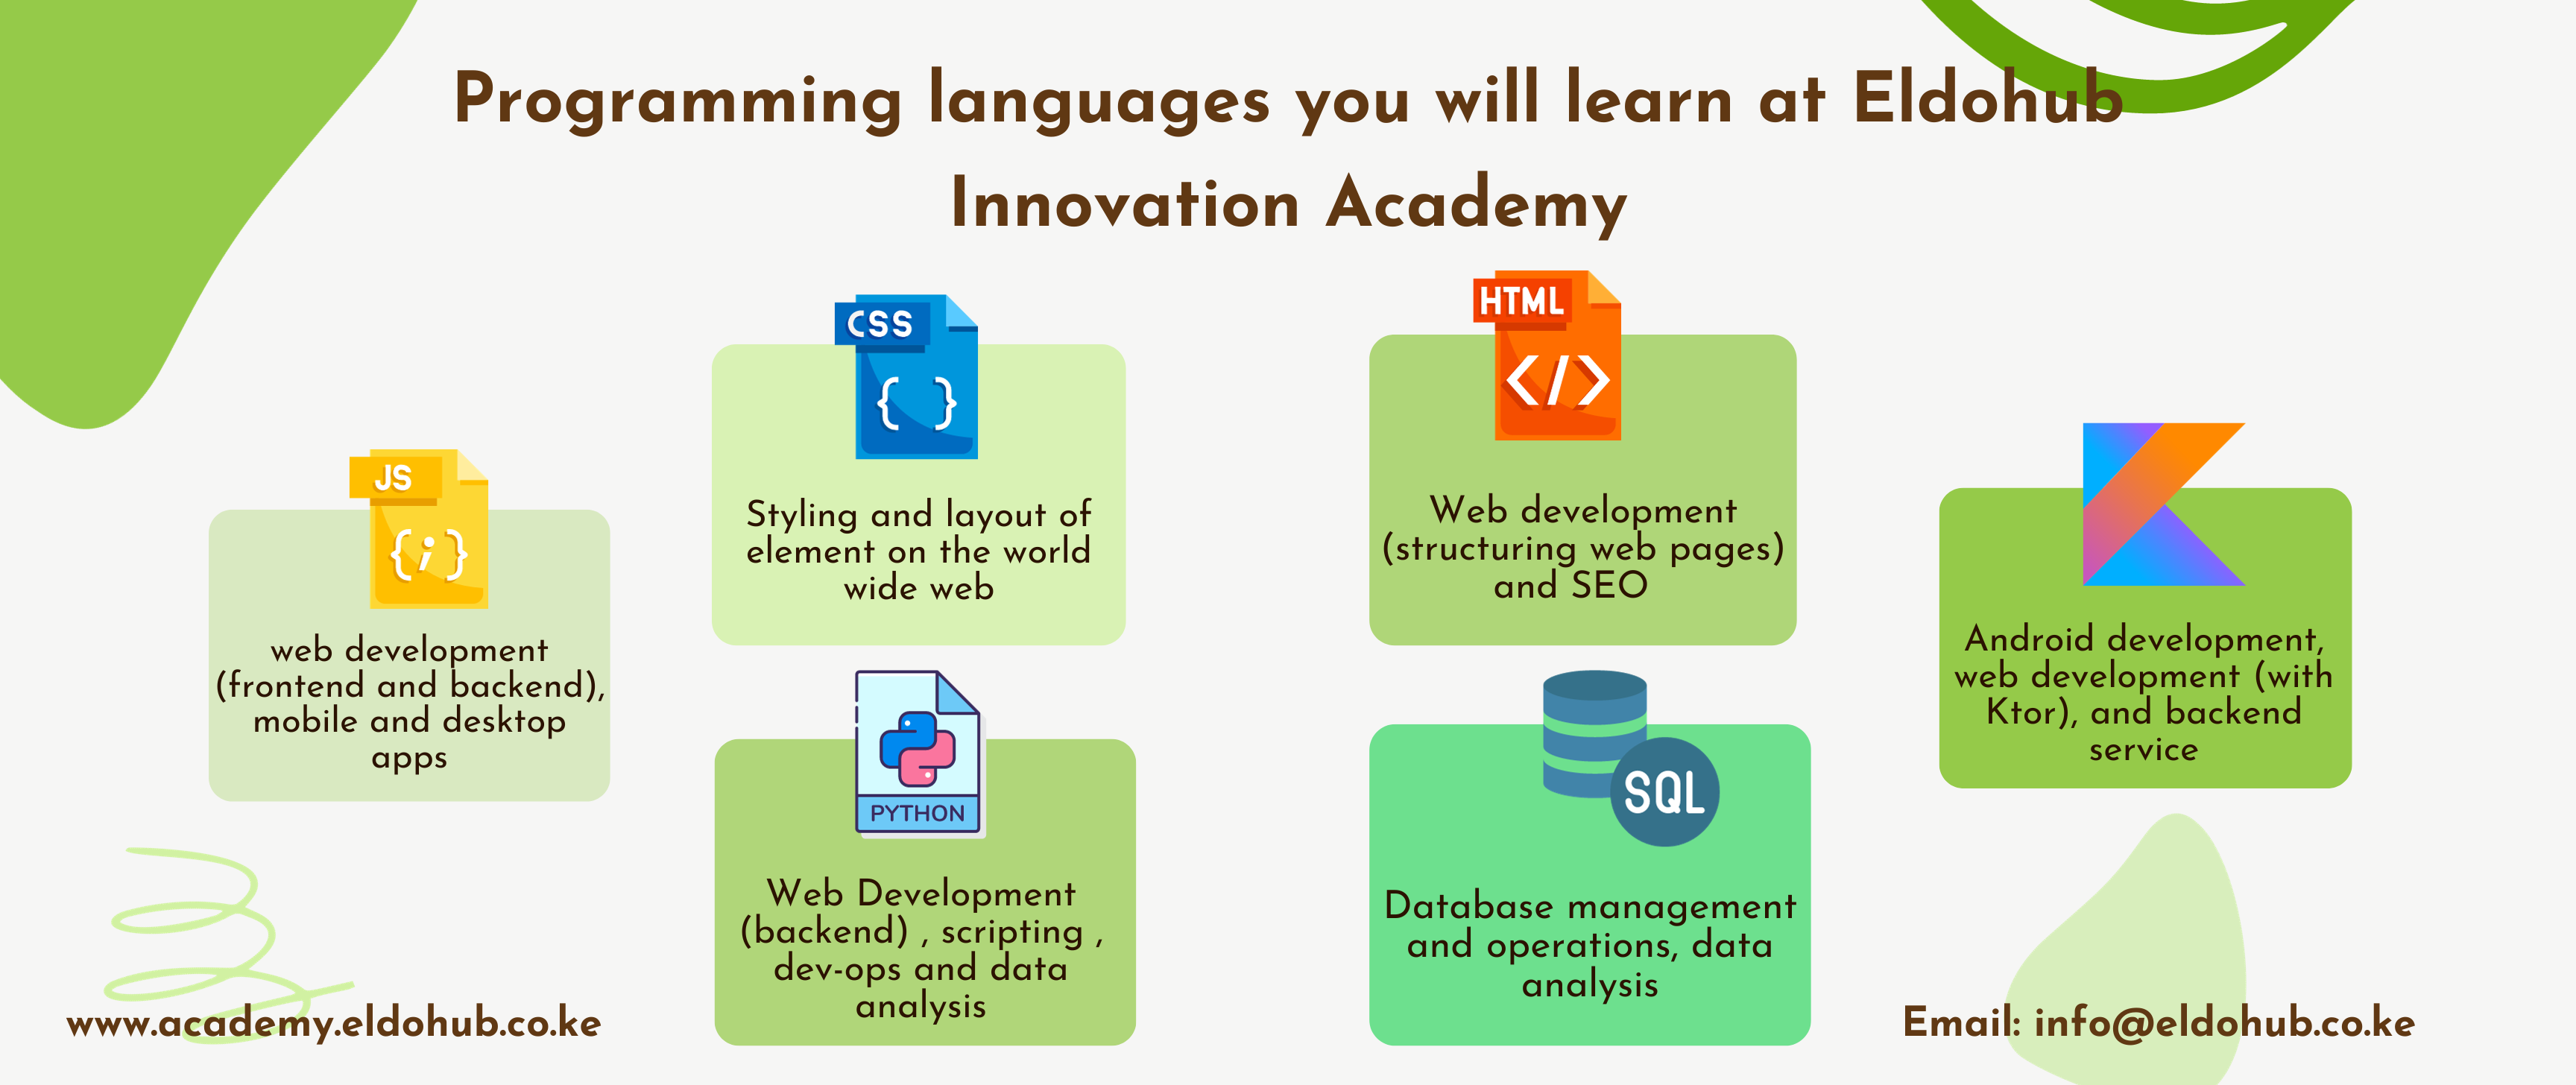 programming languages to learn at eldohub academy